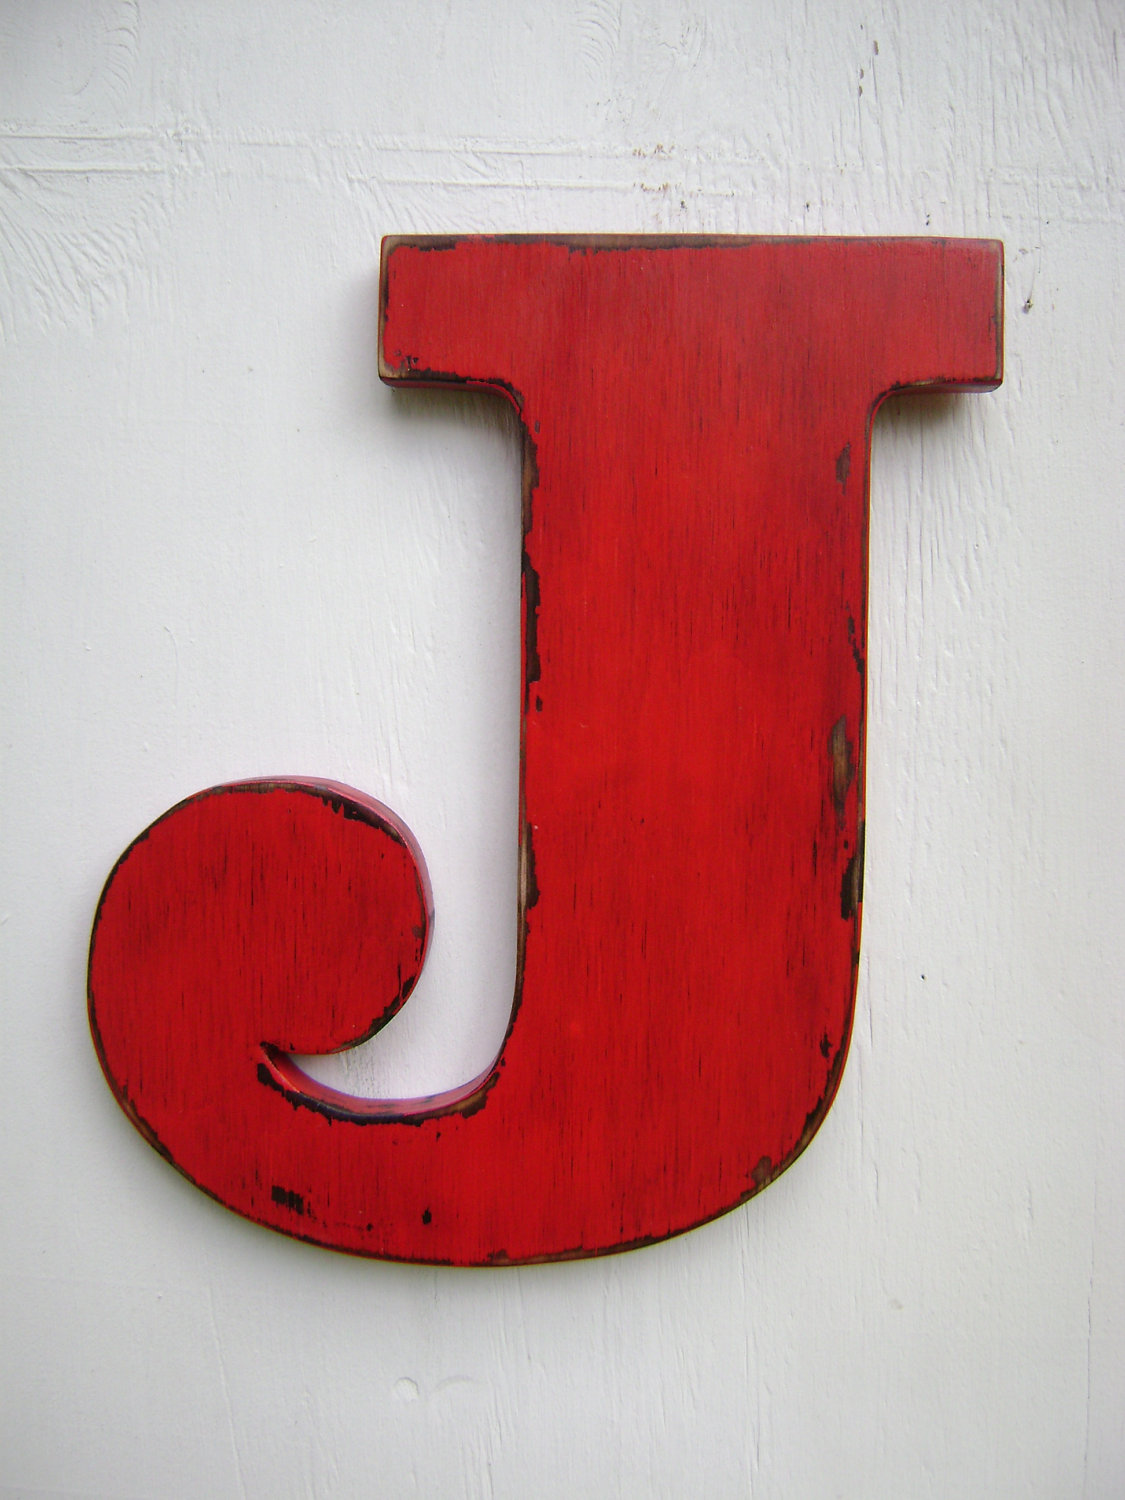 Popular items for letter j on Etsy